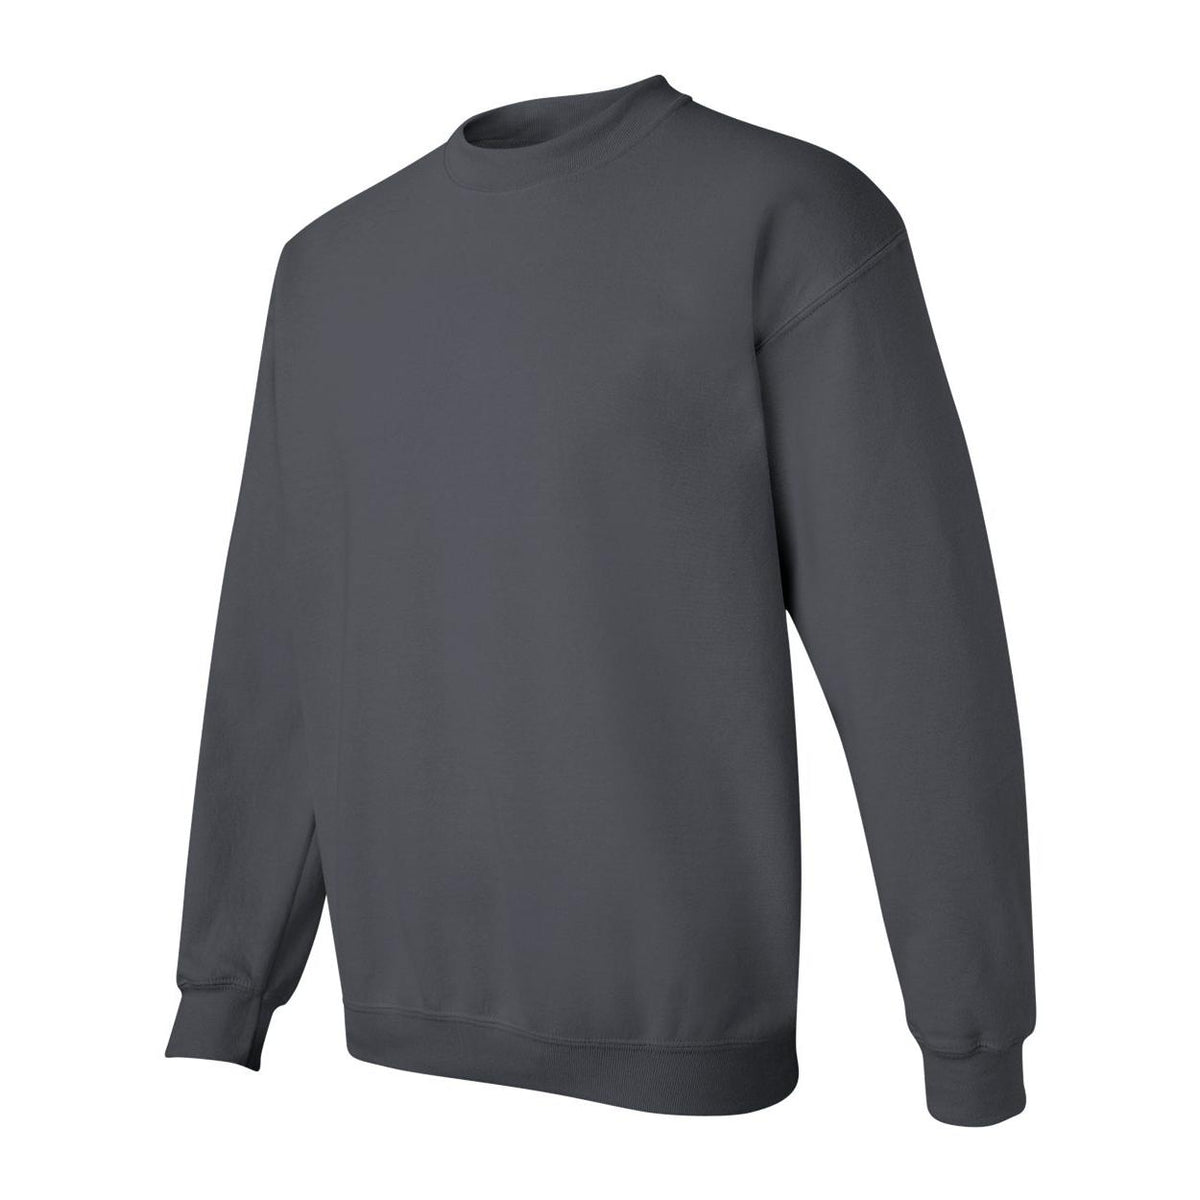 Gildan Heavy Blend Sweatshirt - Shirtworks